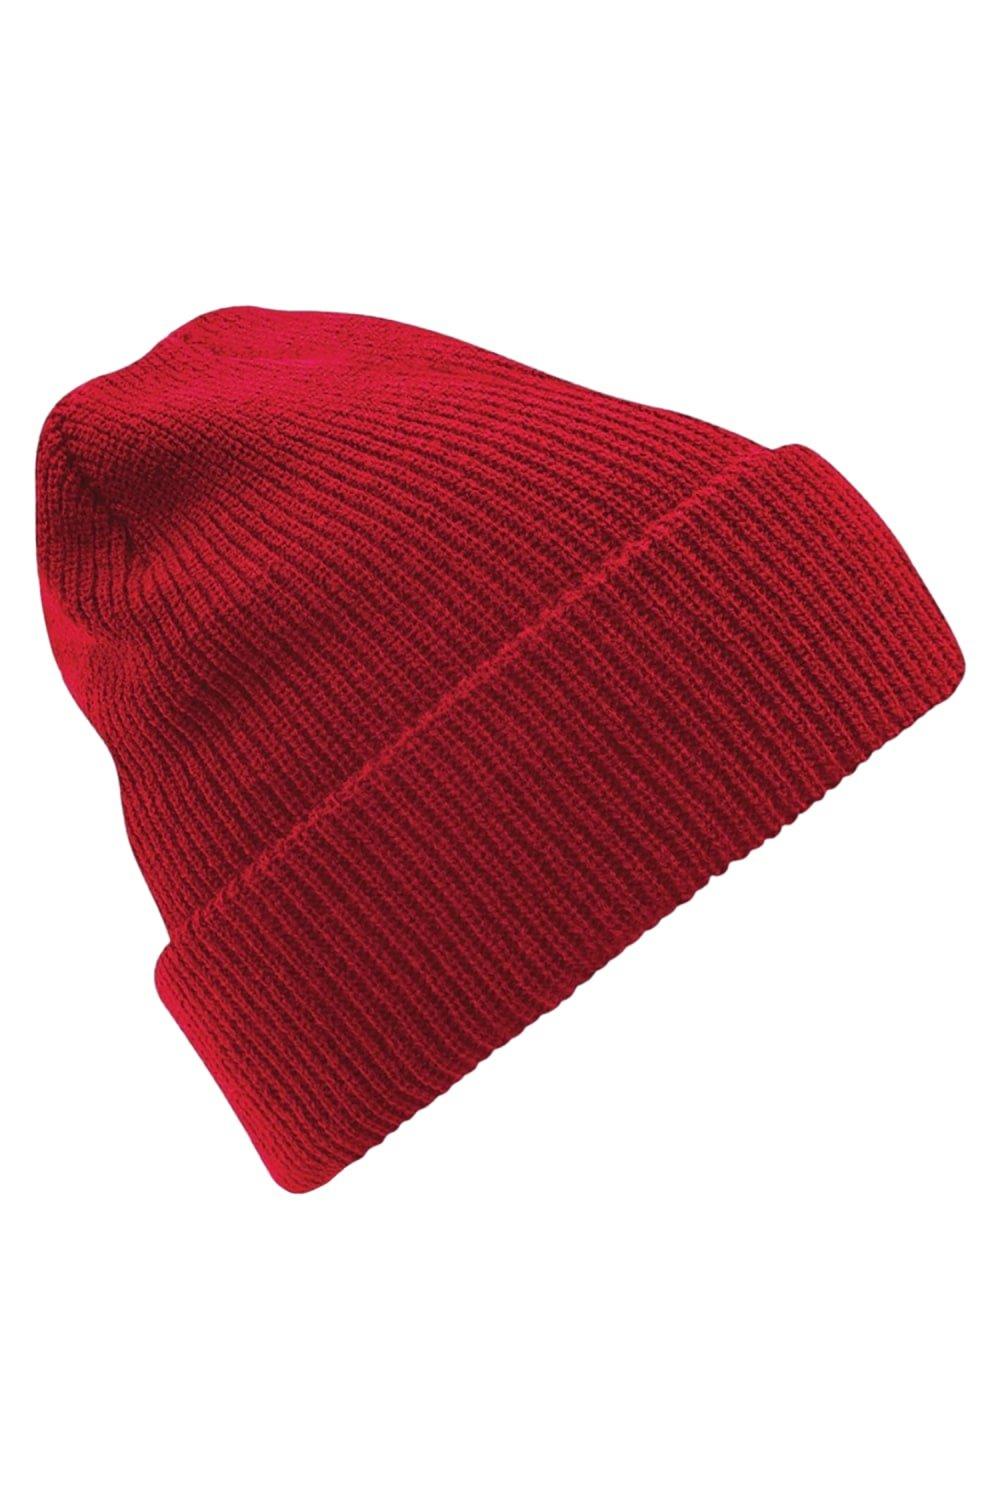 Однотонная зимняя шапка Heritage/Премиум Beechfield, красный